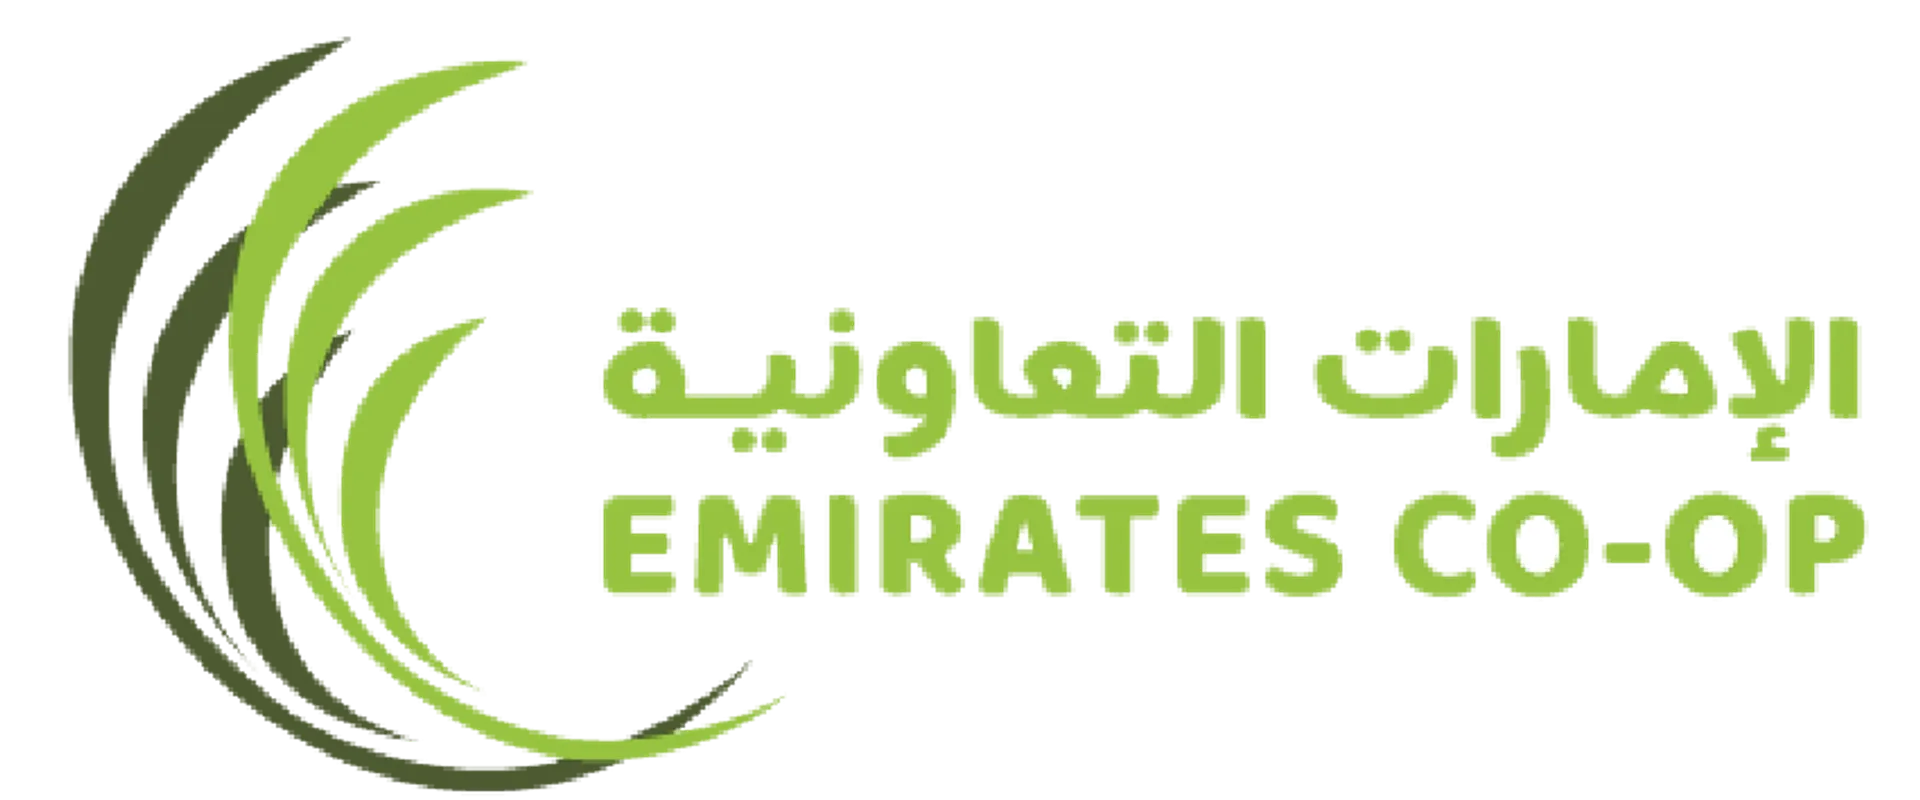 EMIRATES CO.OP logo. Current catalogue